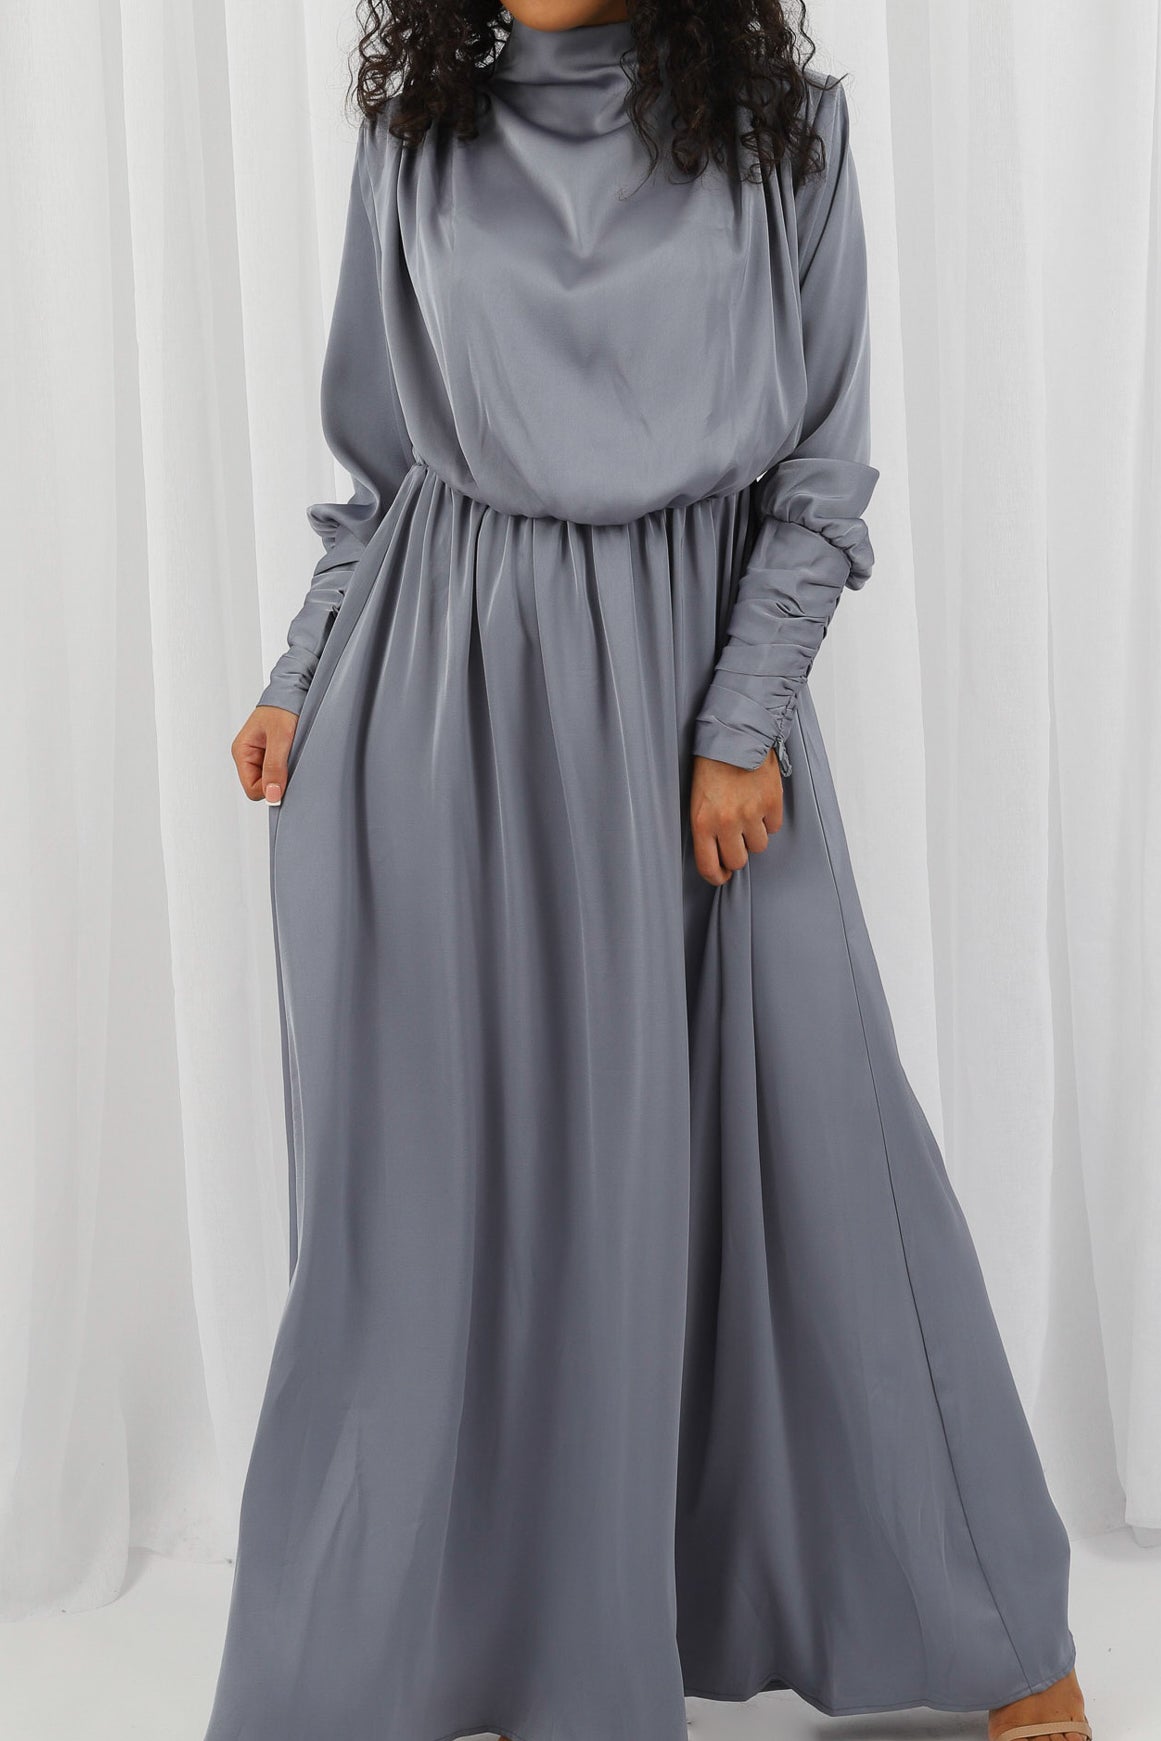 M7913SilverPurple-dress-abaya